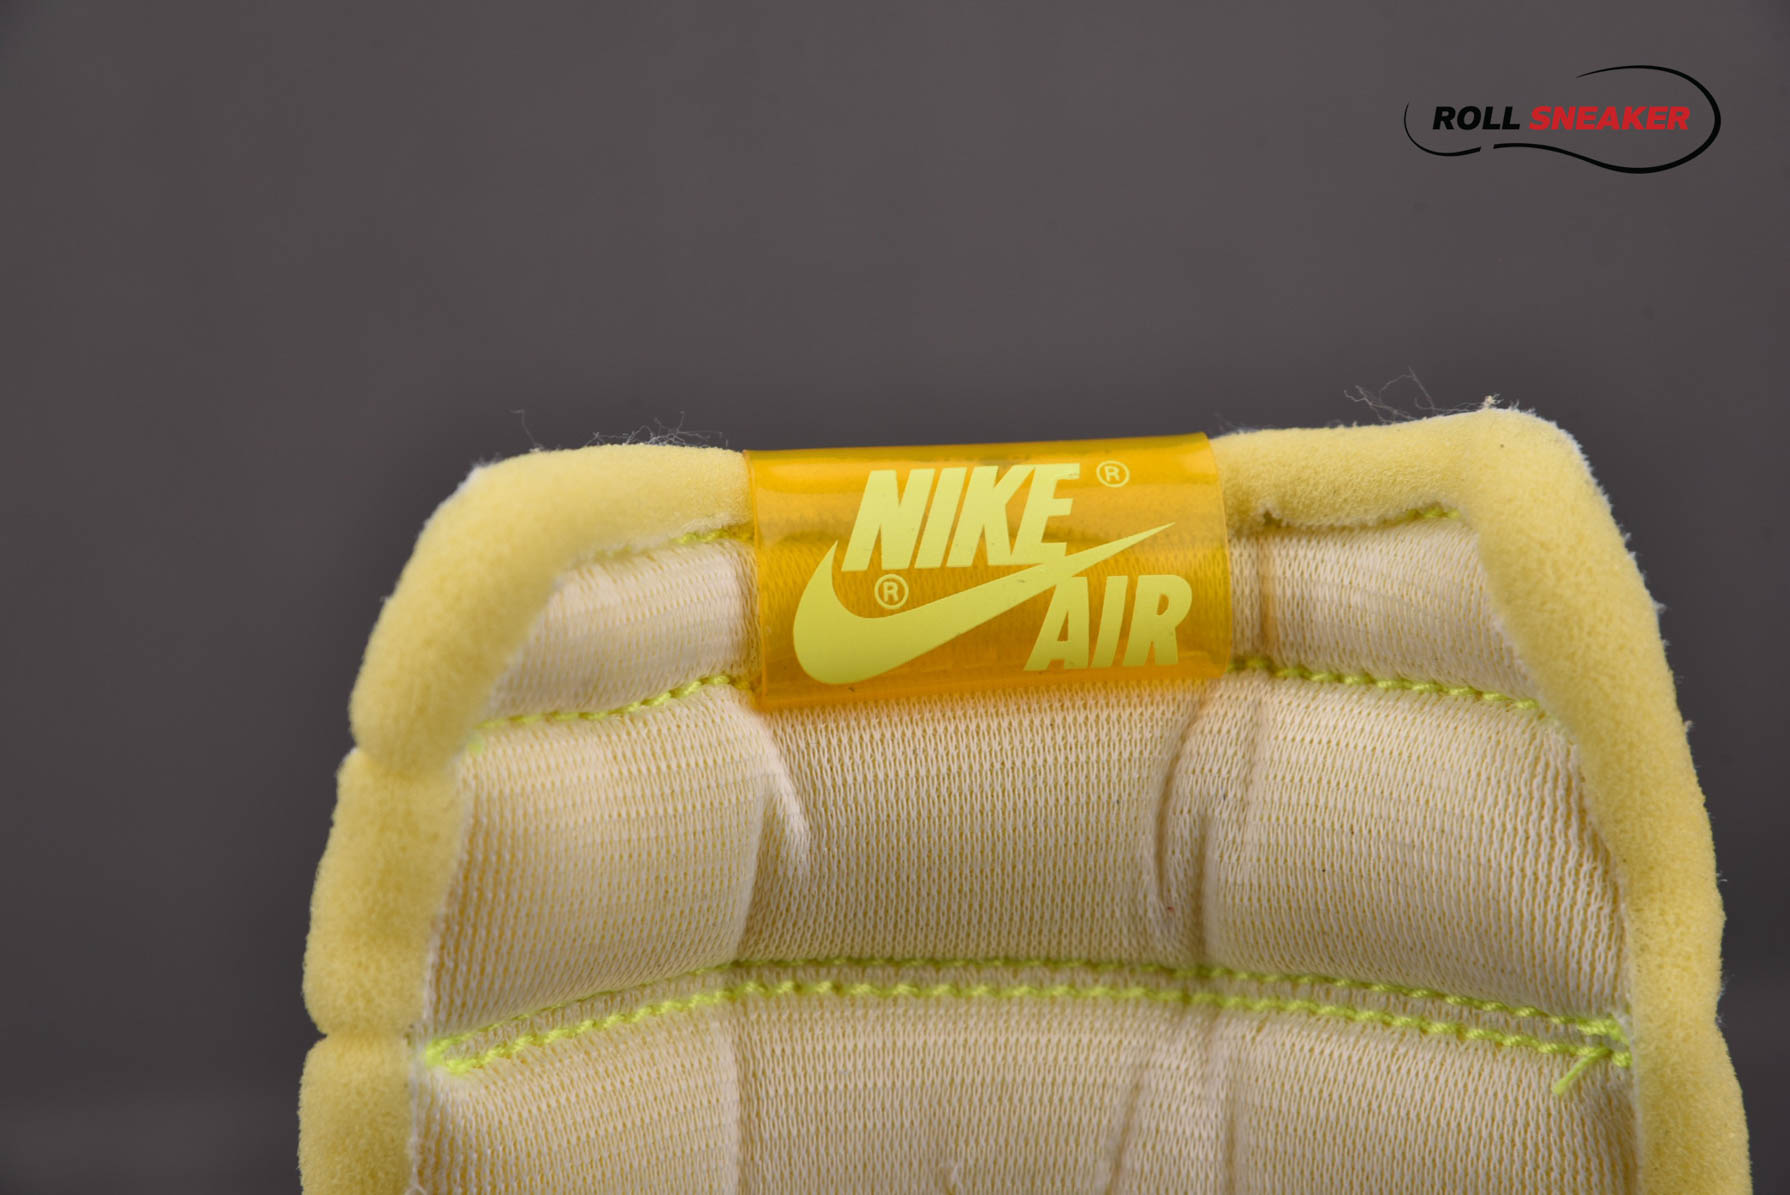 Nike Air Jordan 1 Retro High Volt Gold